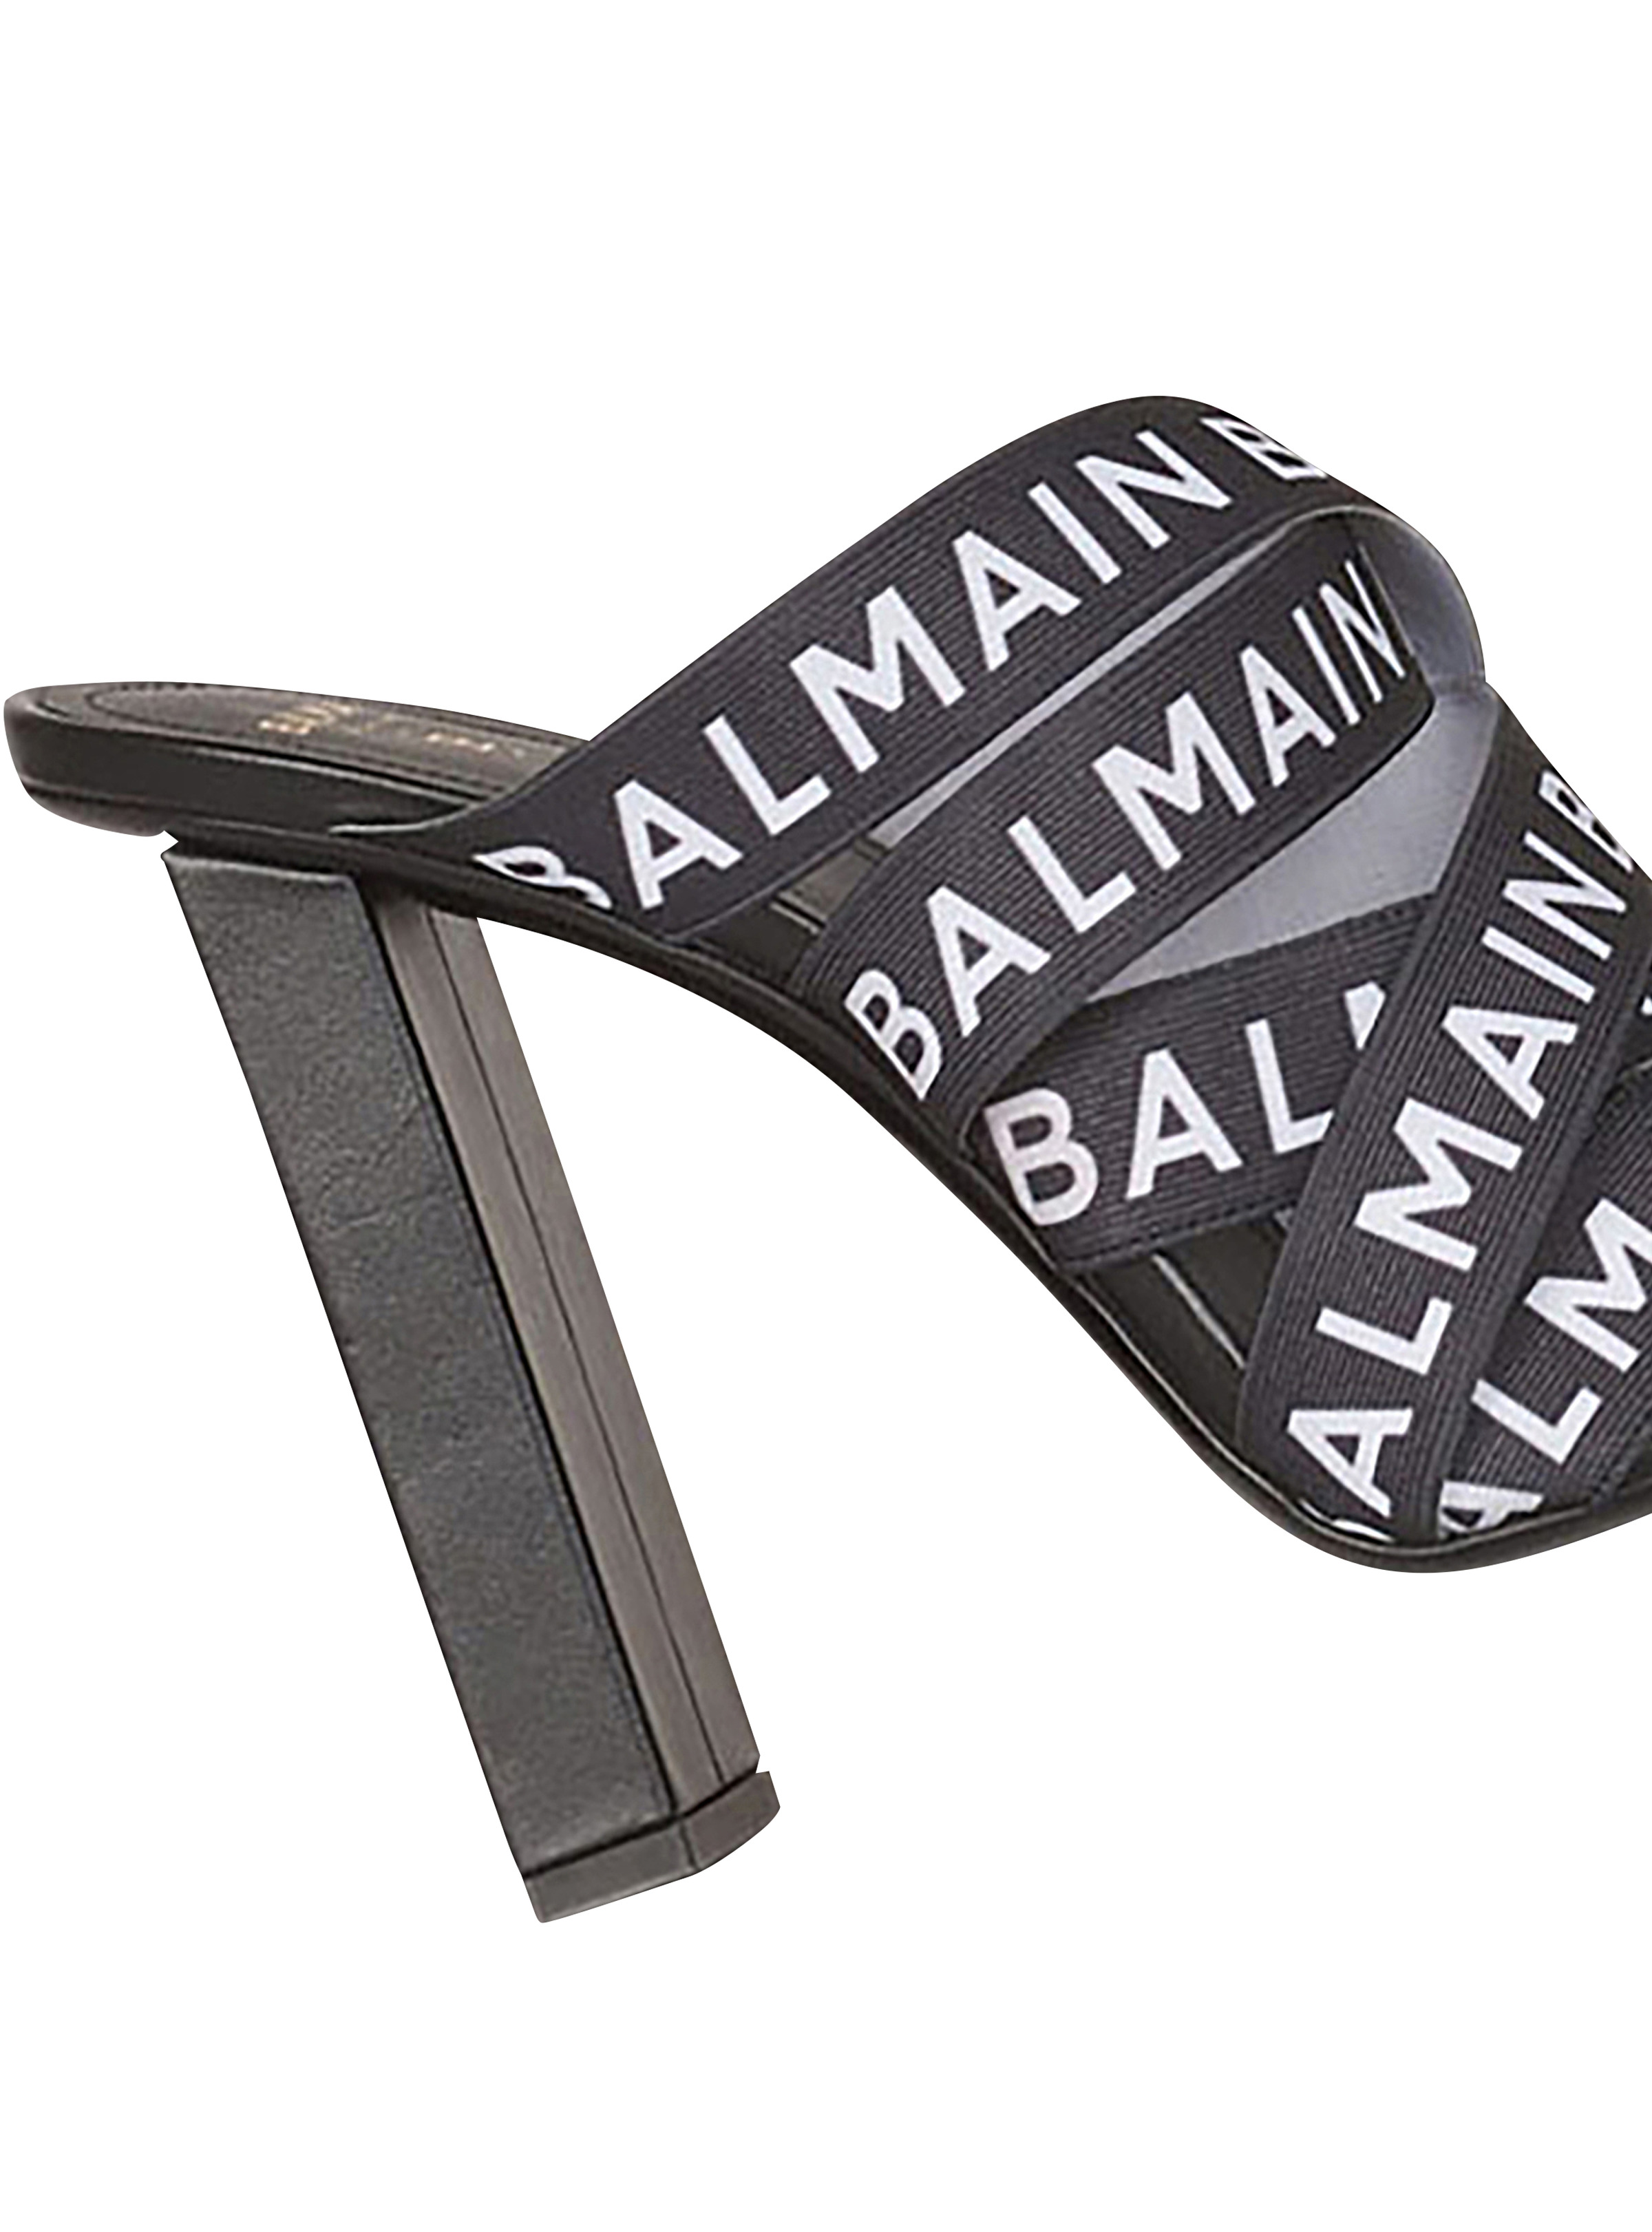 Union sandals with Balmain logo print - 6